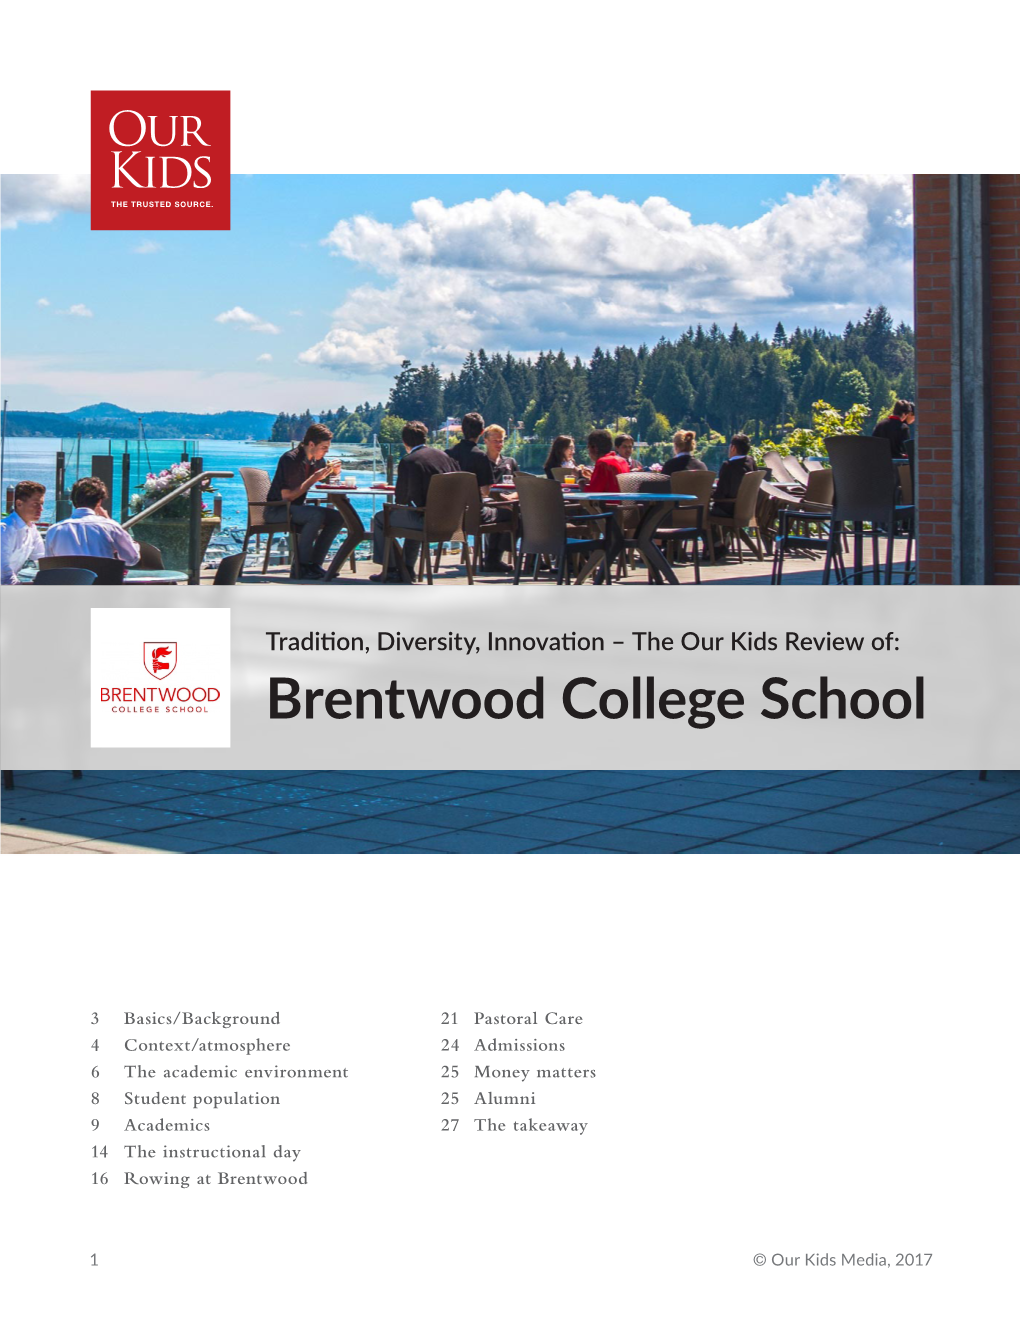 Brentwood College School